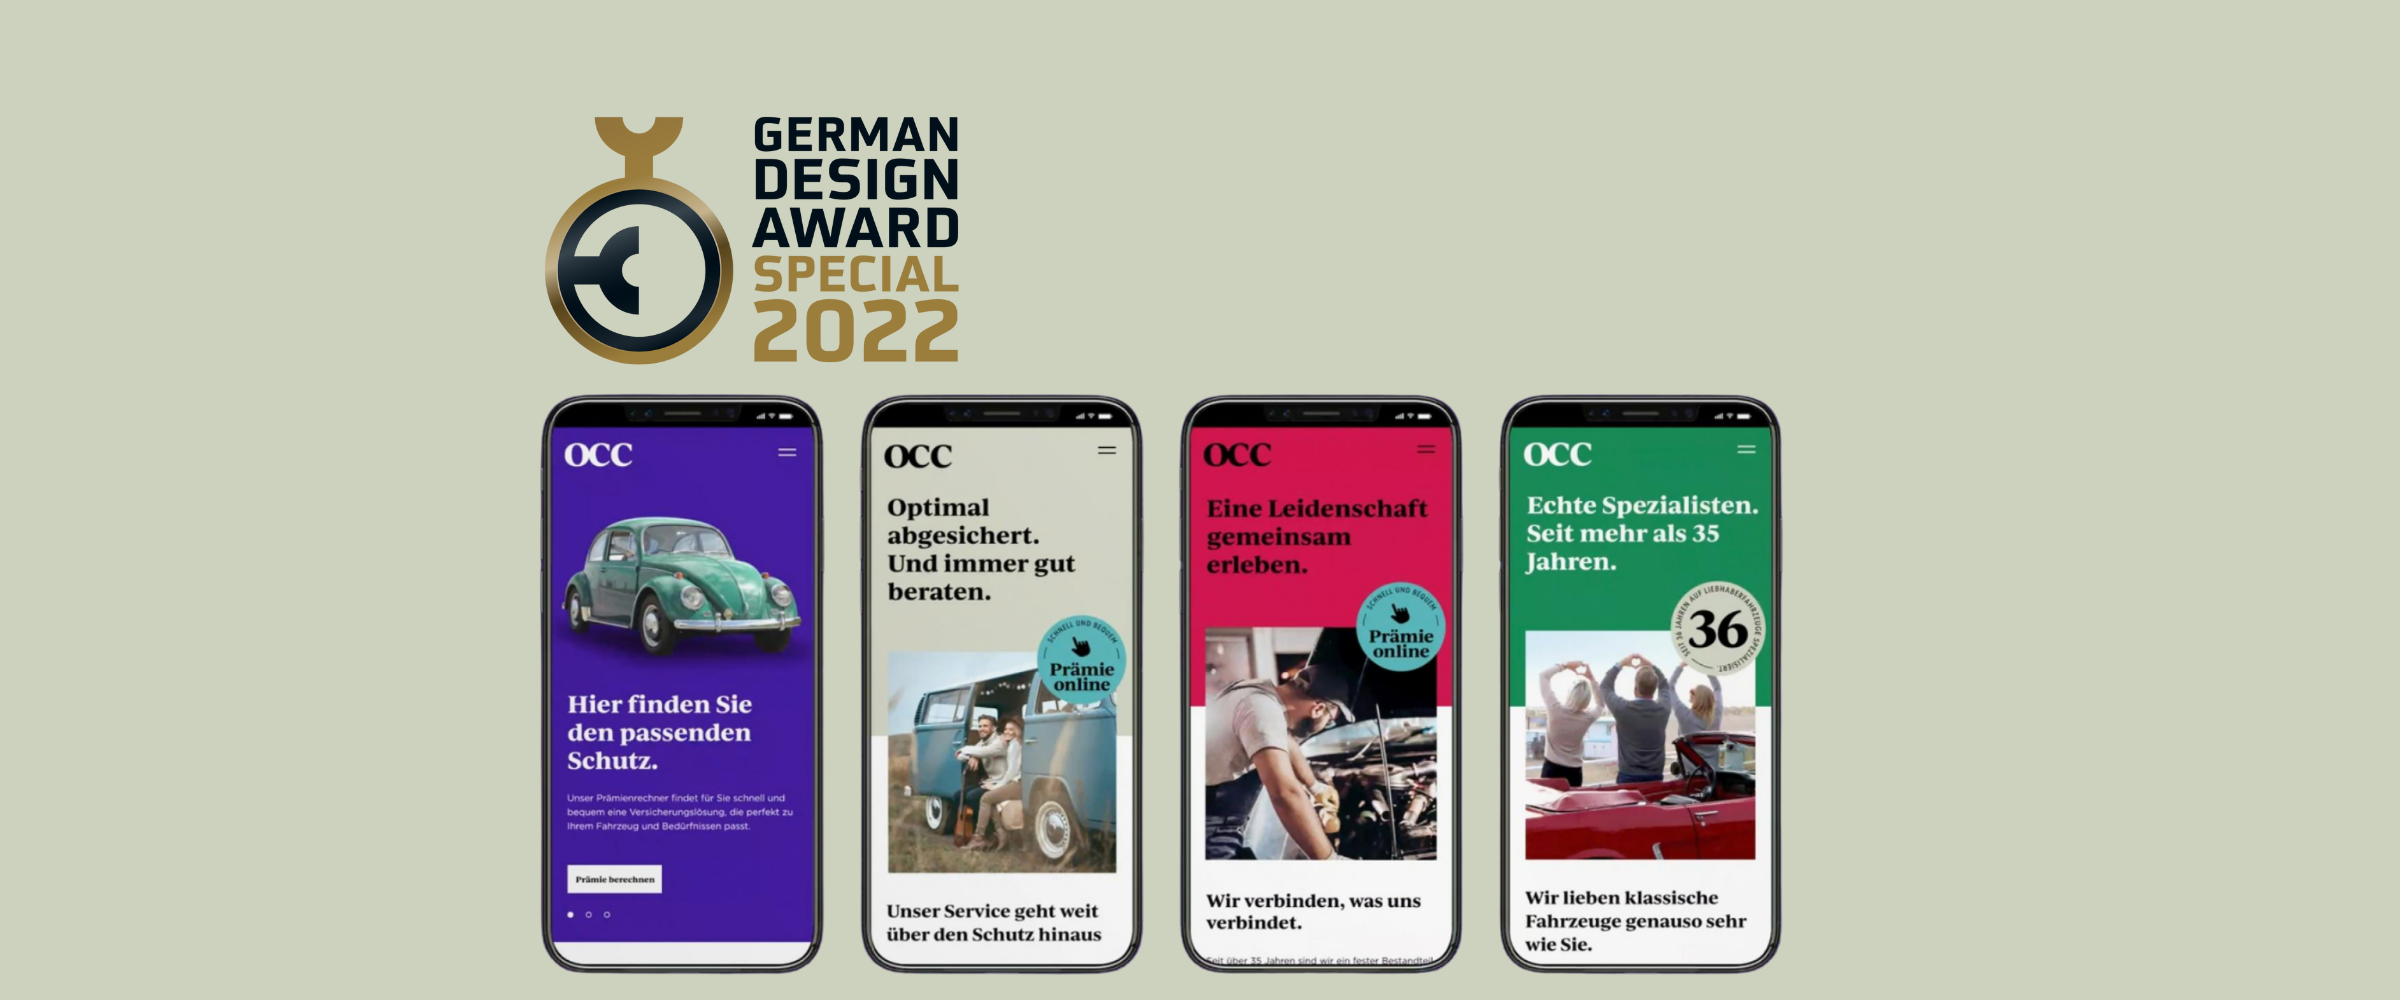 German Design Award 2022 2400 x 1000 px